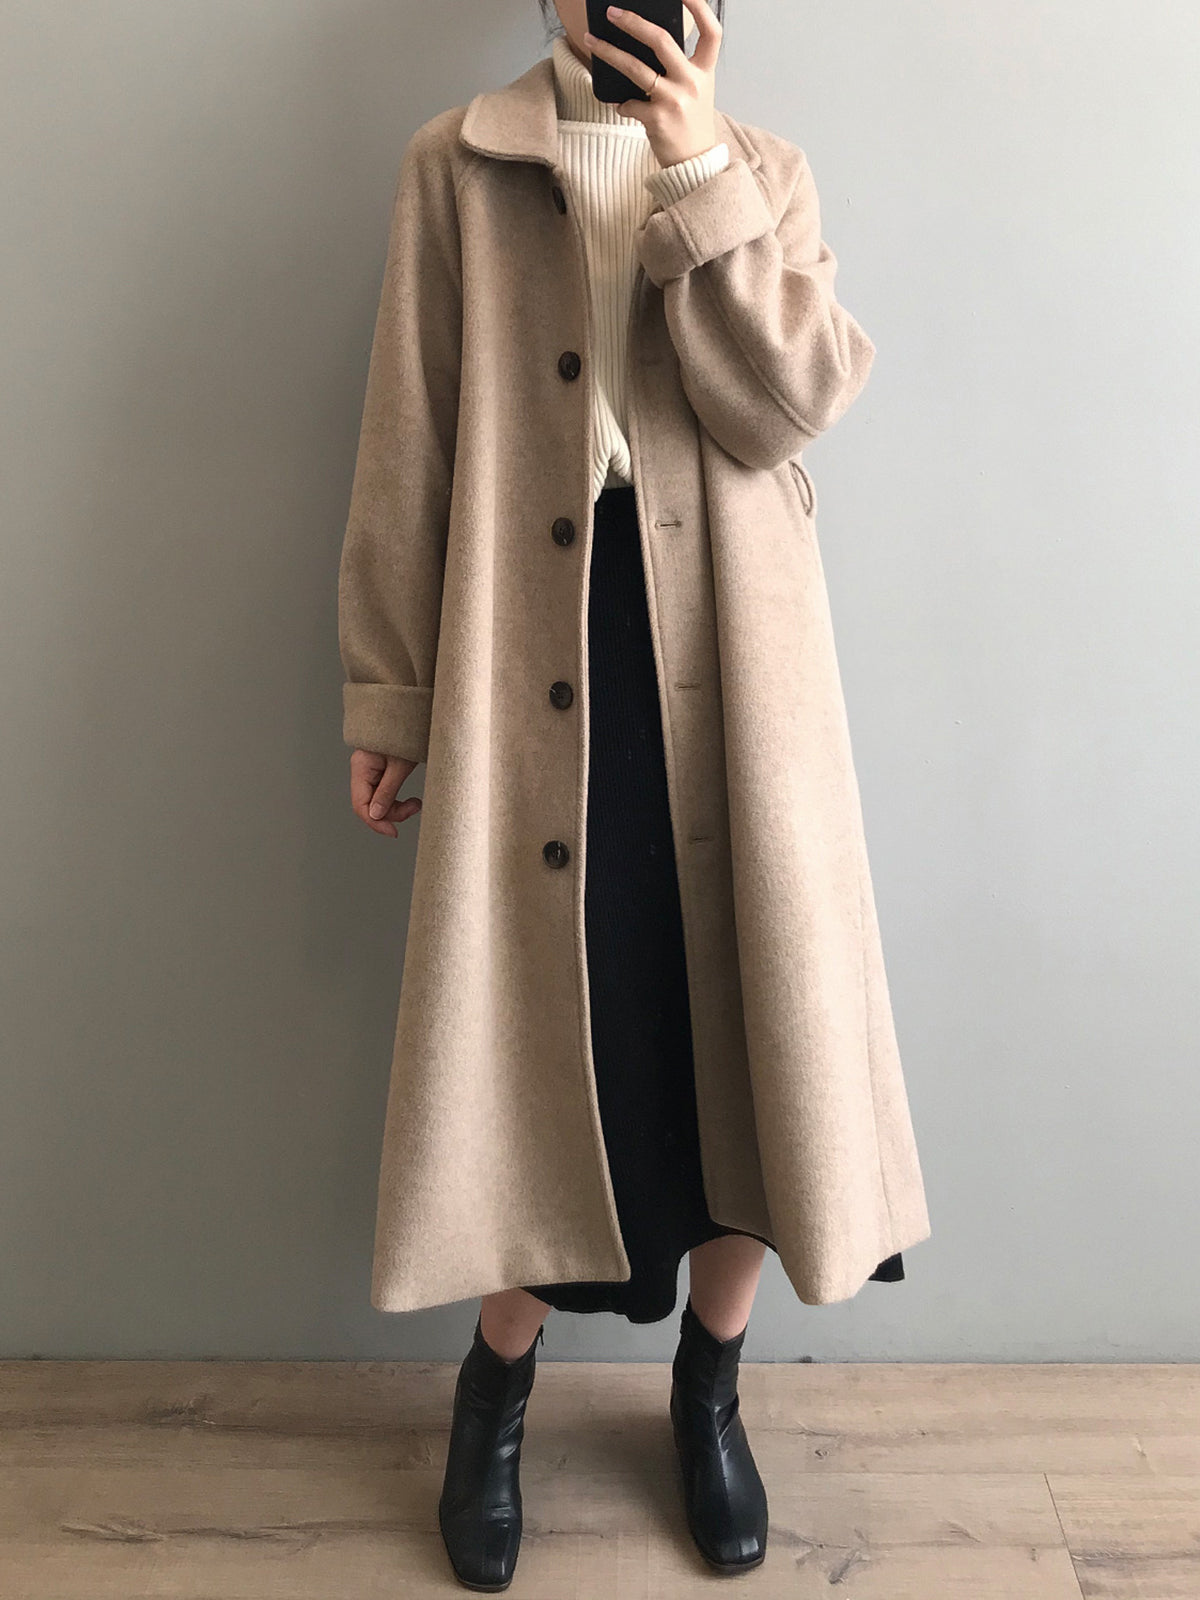 The Modernist Wool Overcoat